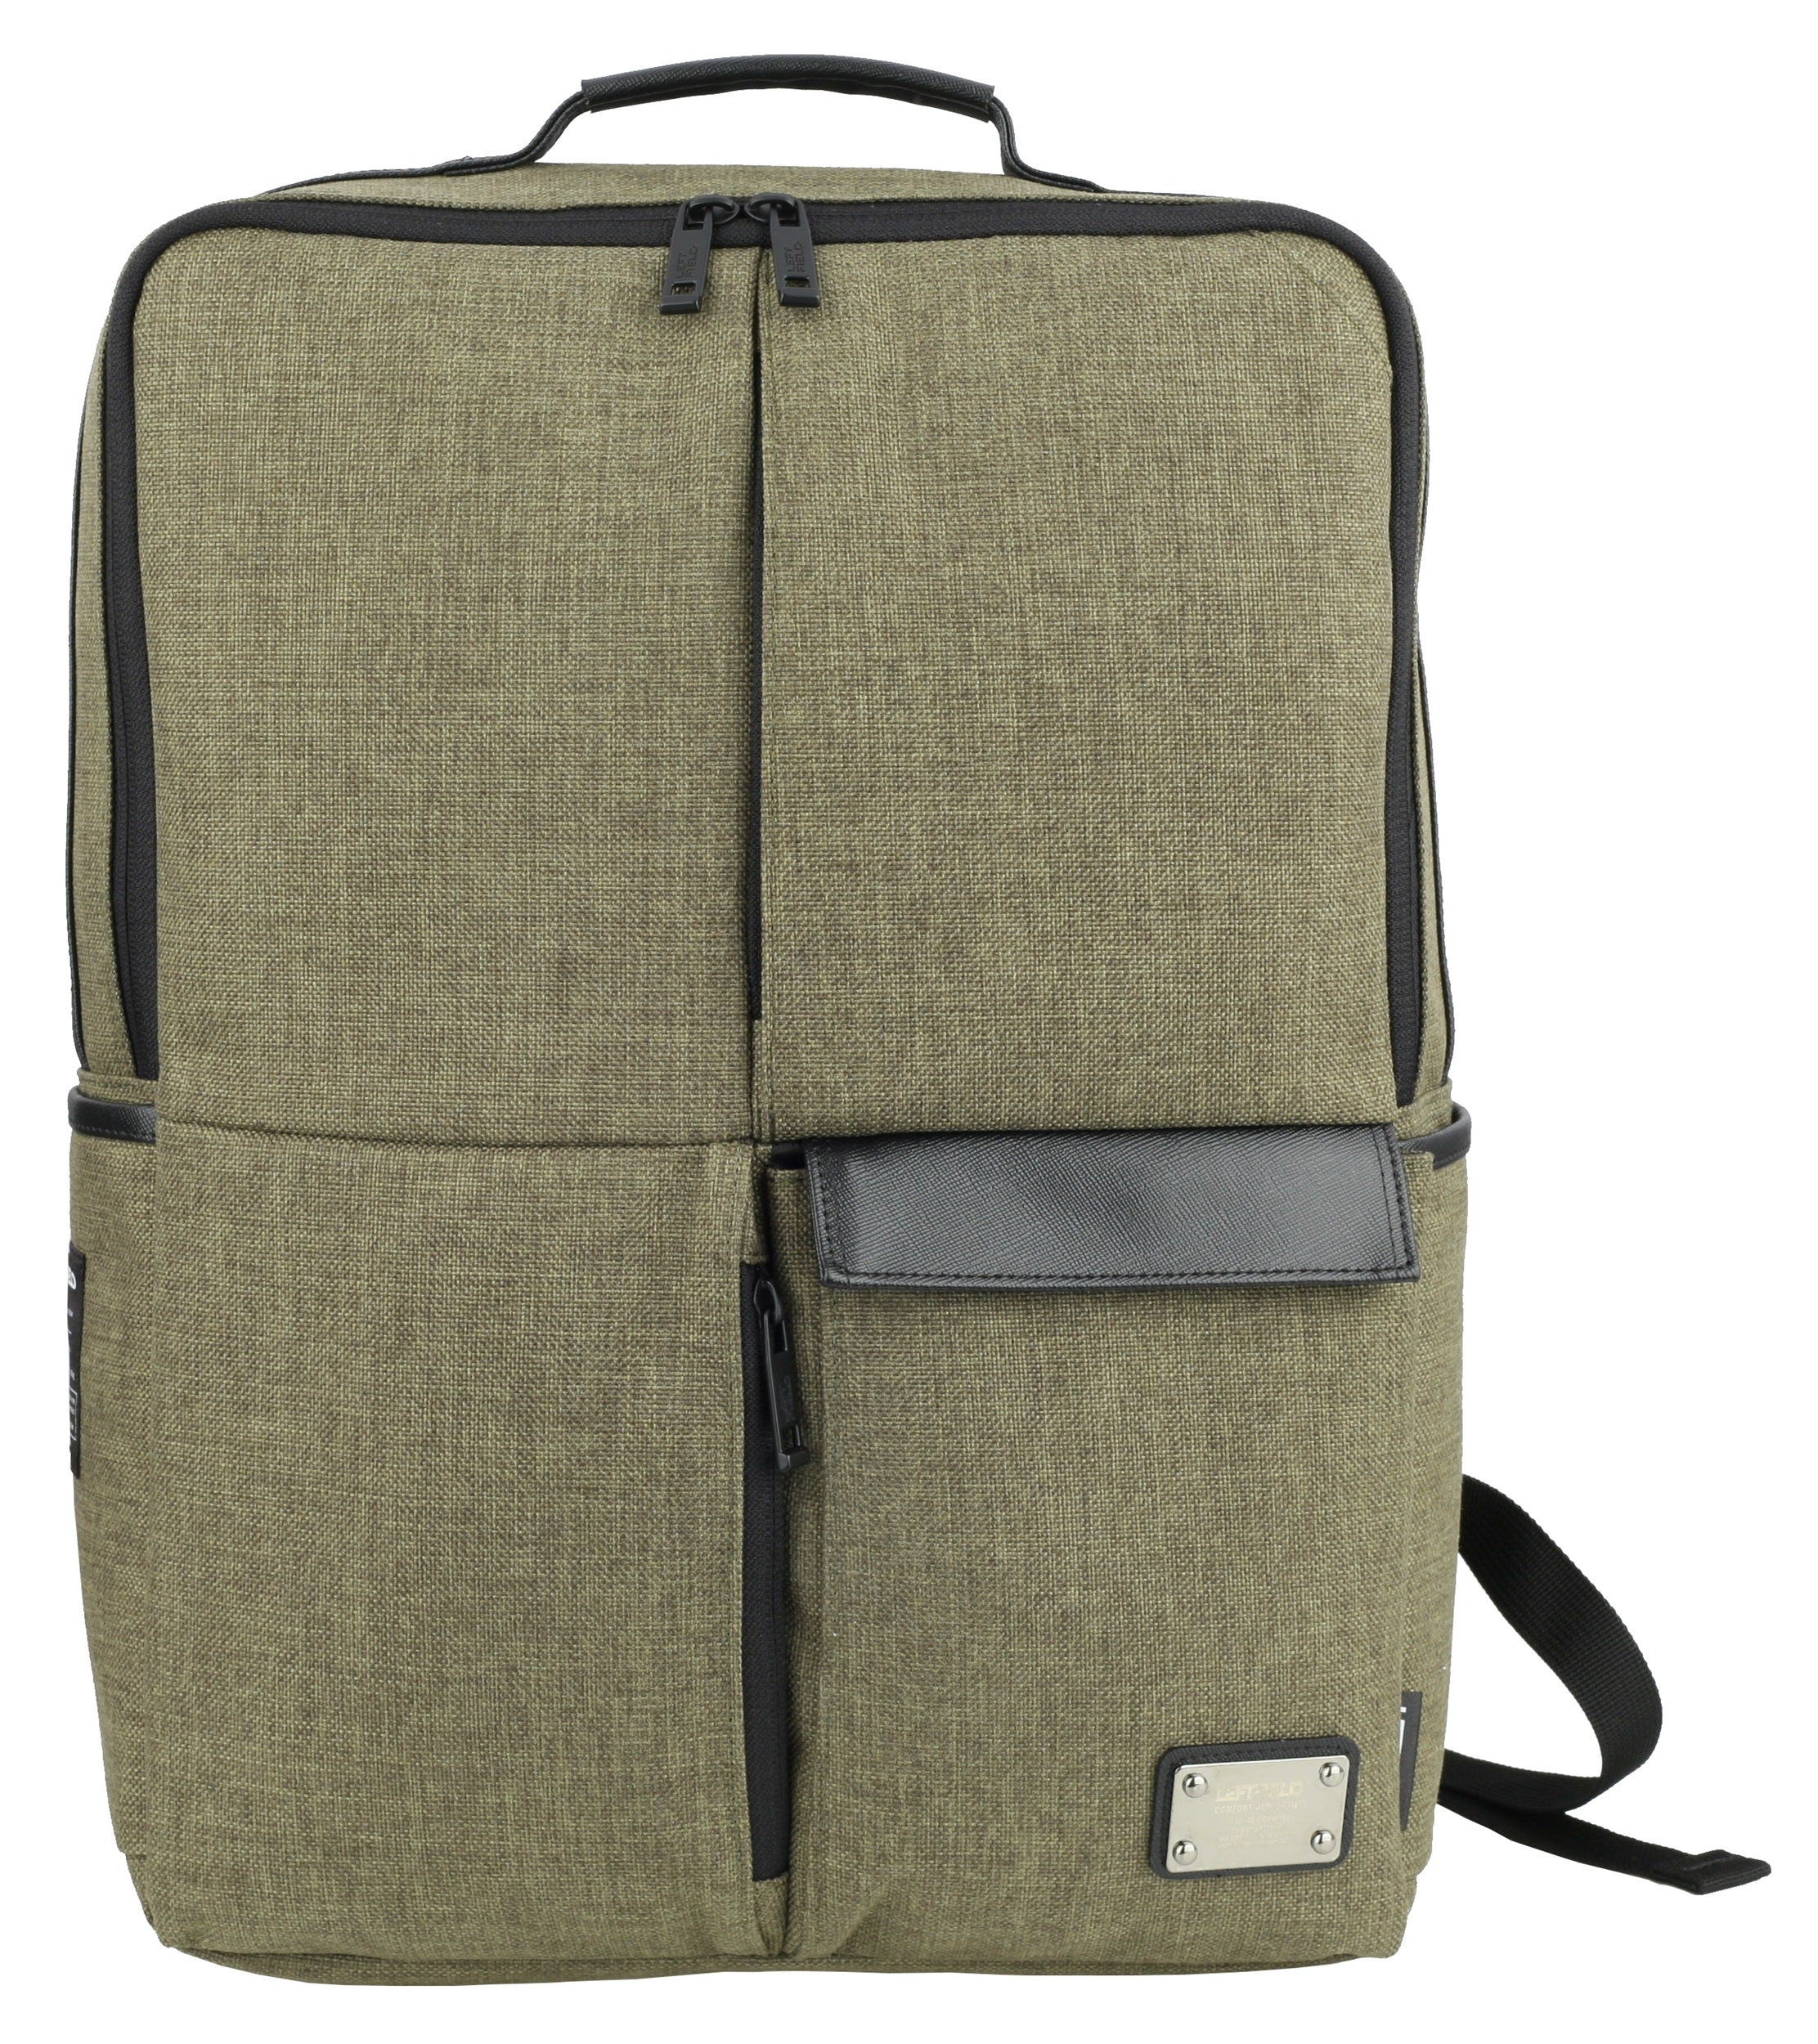 Khaki Green Canvas Casual Daypacks School Backpacks